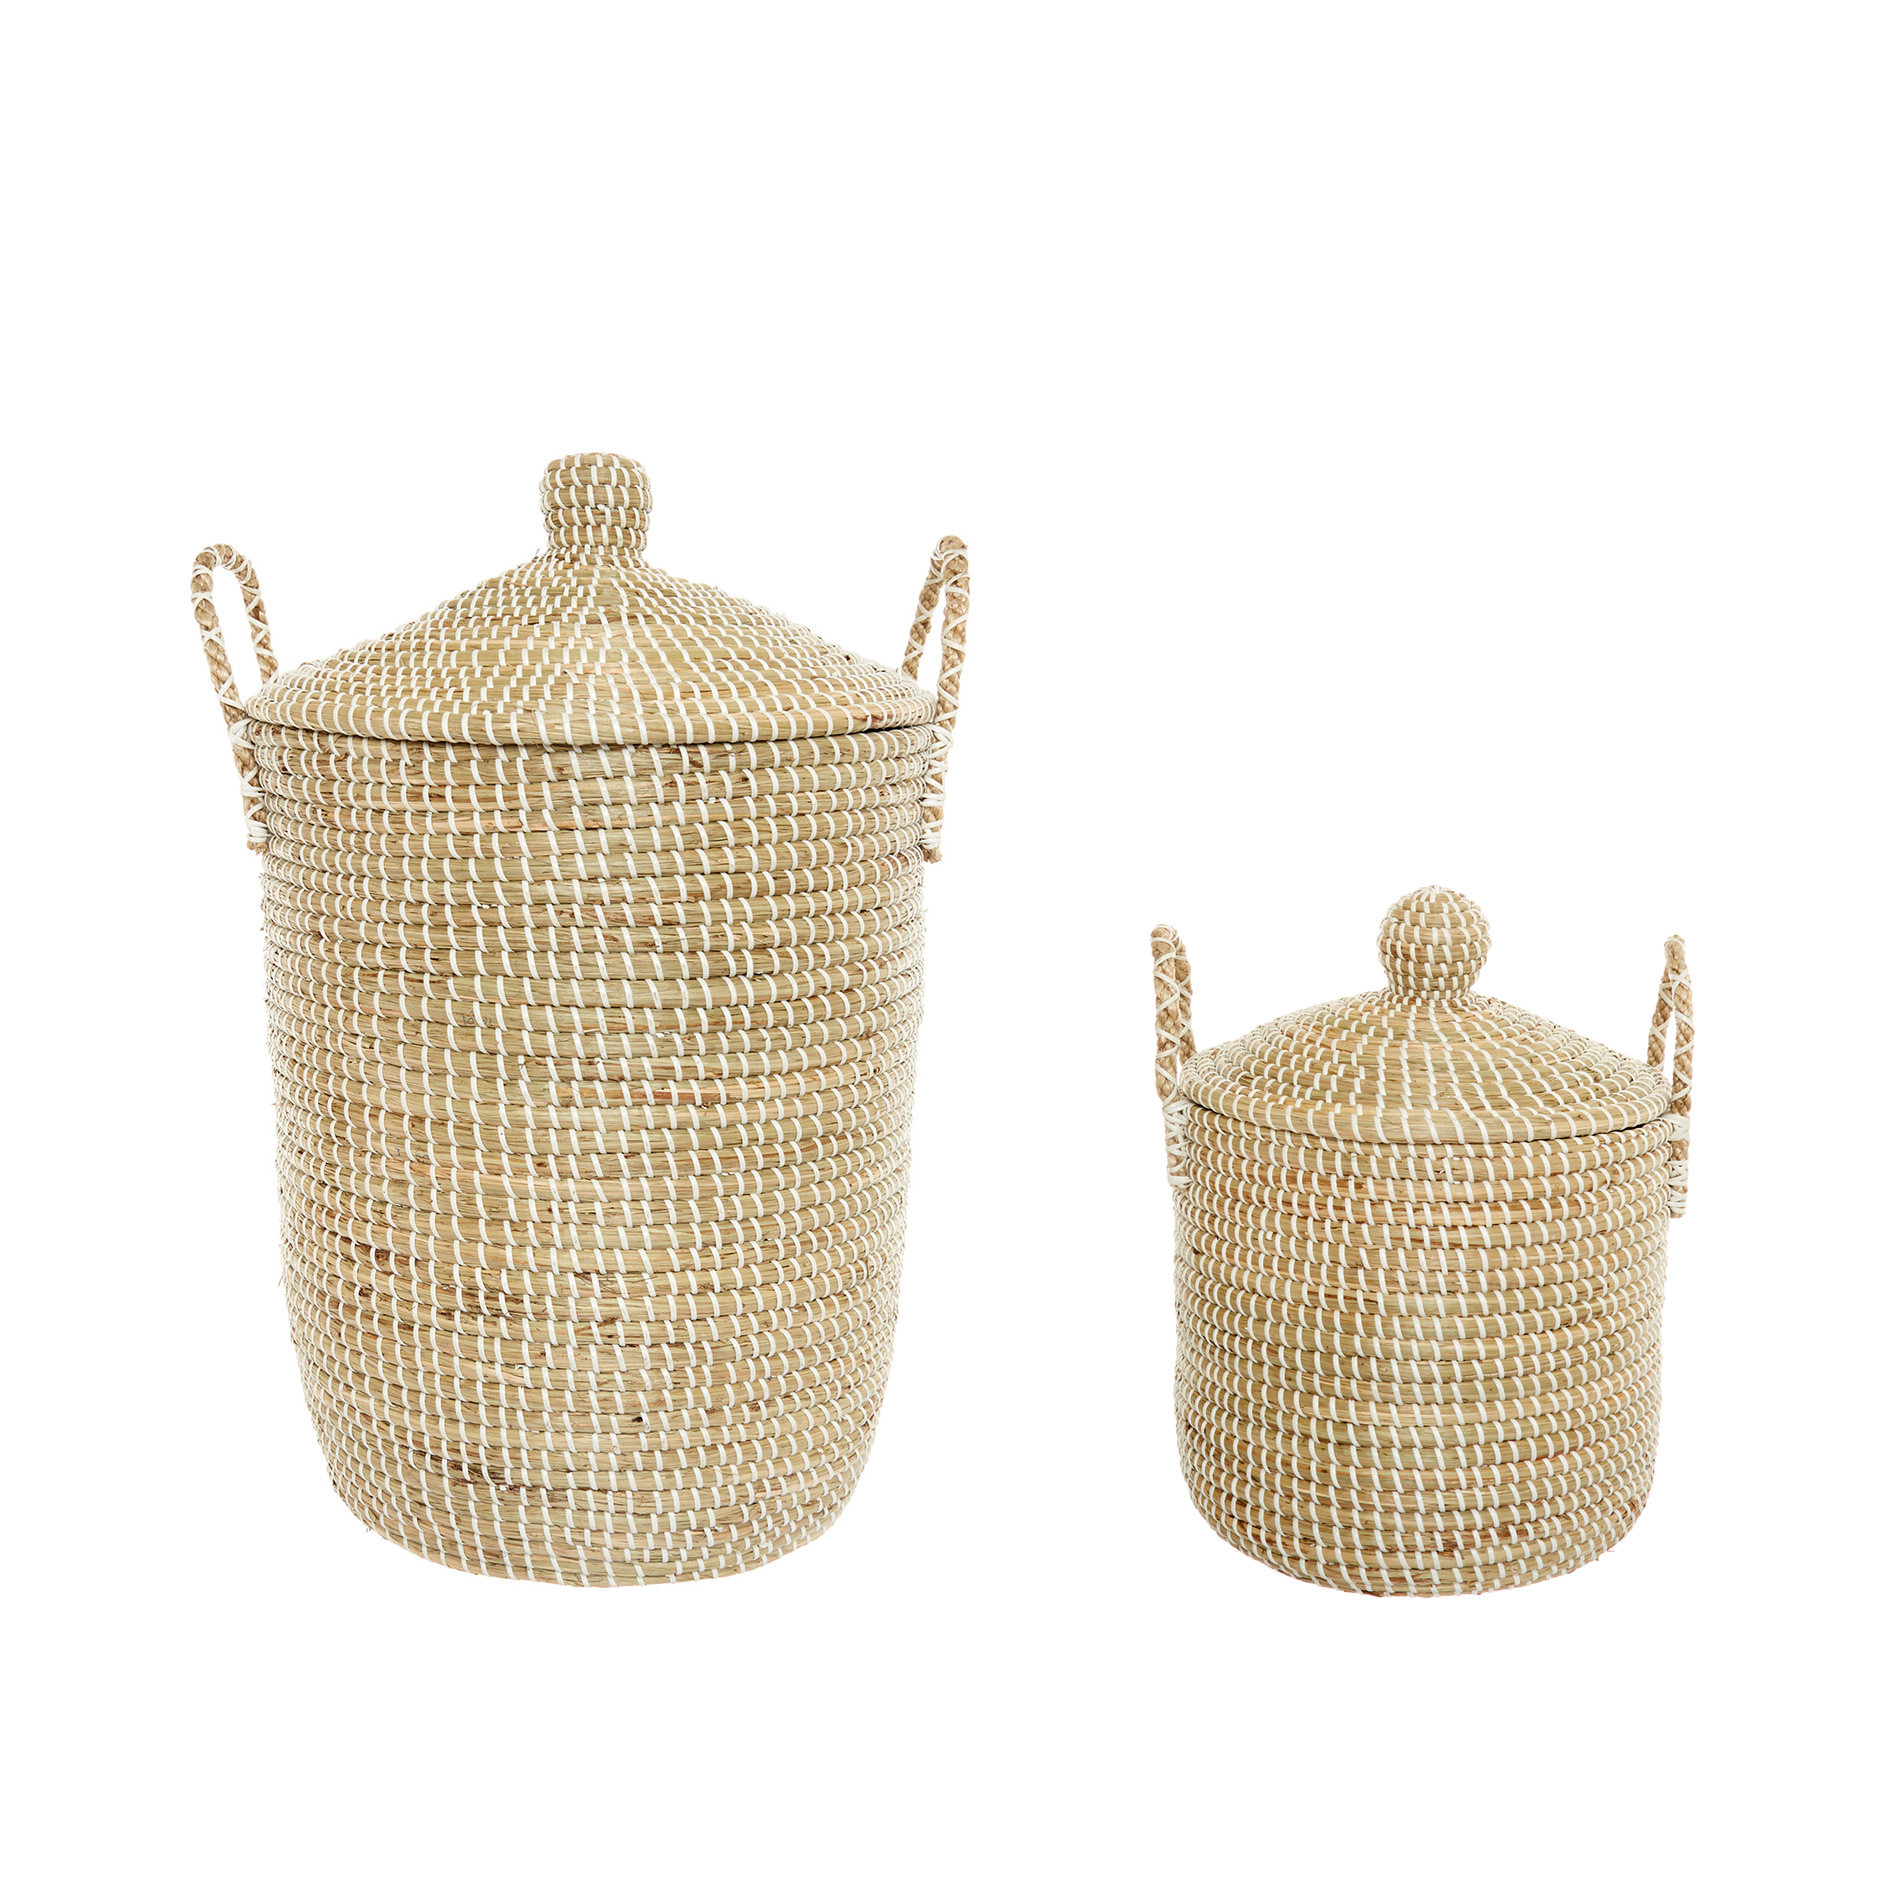 Handmade seagrass laundry basket, Beige, large image number 2